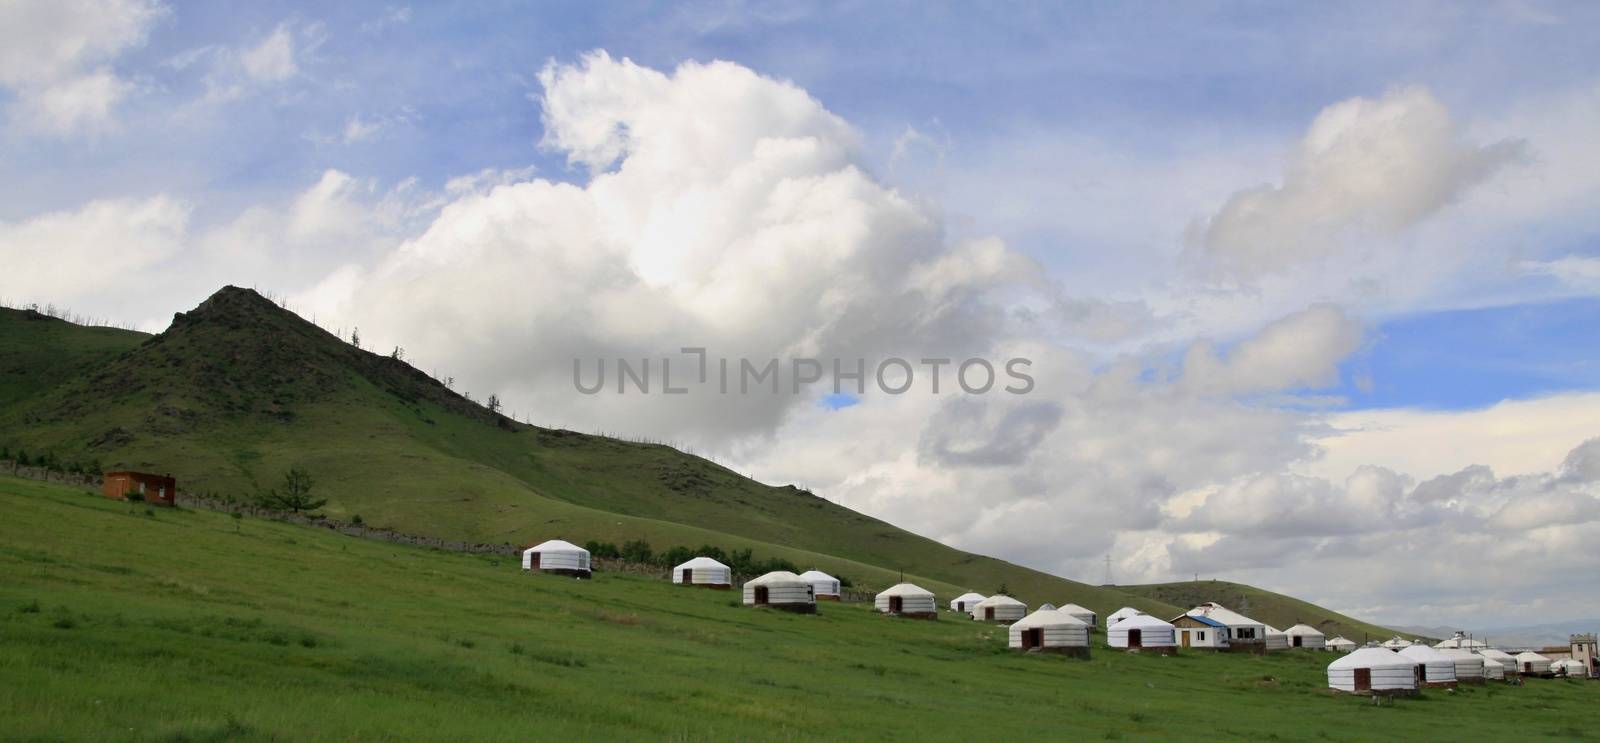 Mongolian Yurts near  Ullaanbaator in Mongolia by jnerad